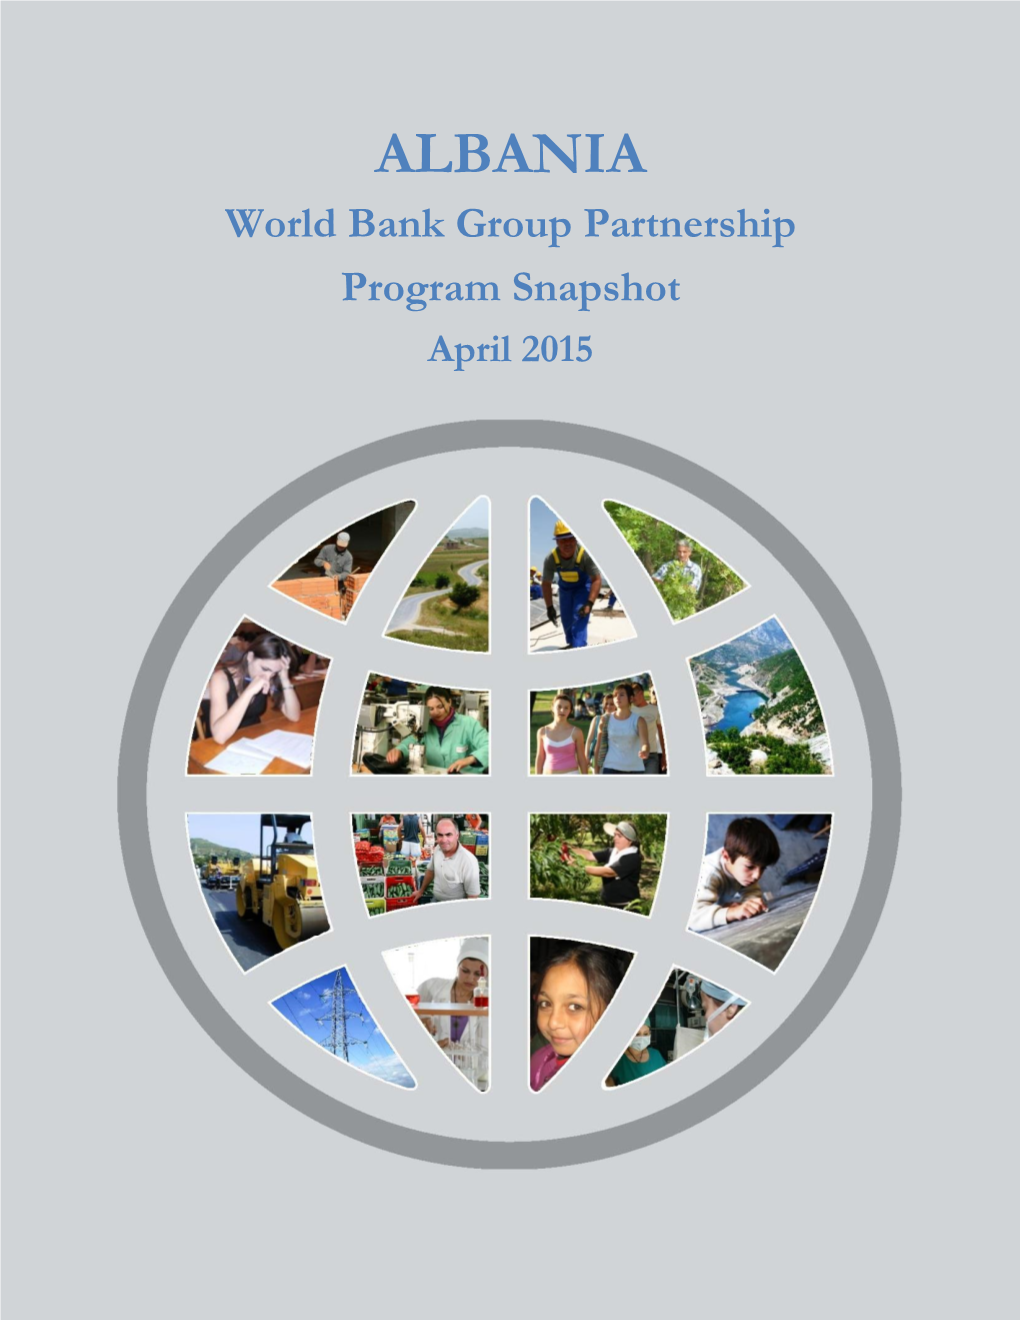 Albania: World Bank Group Partnership Program Snapshot